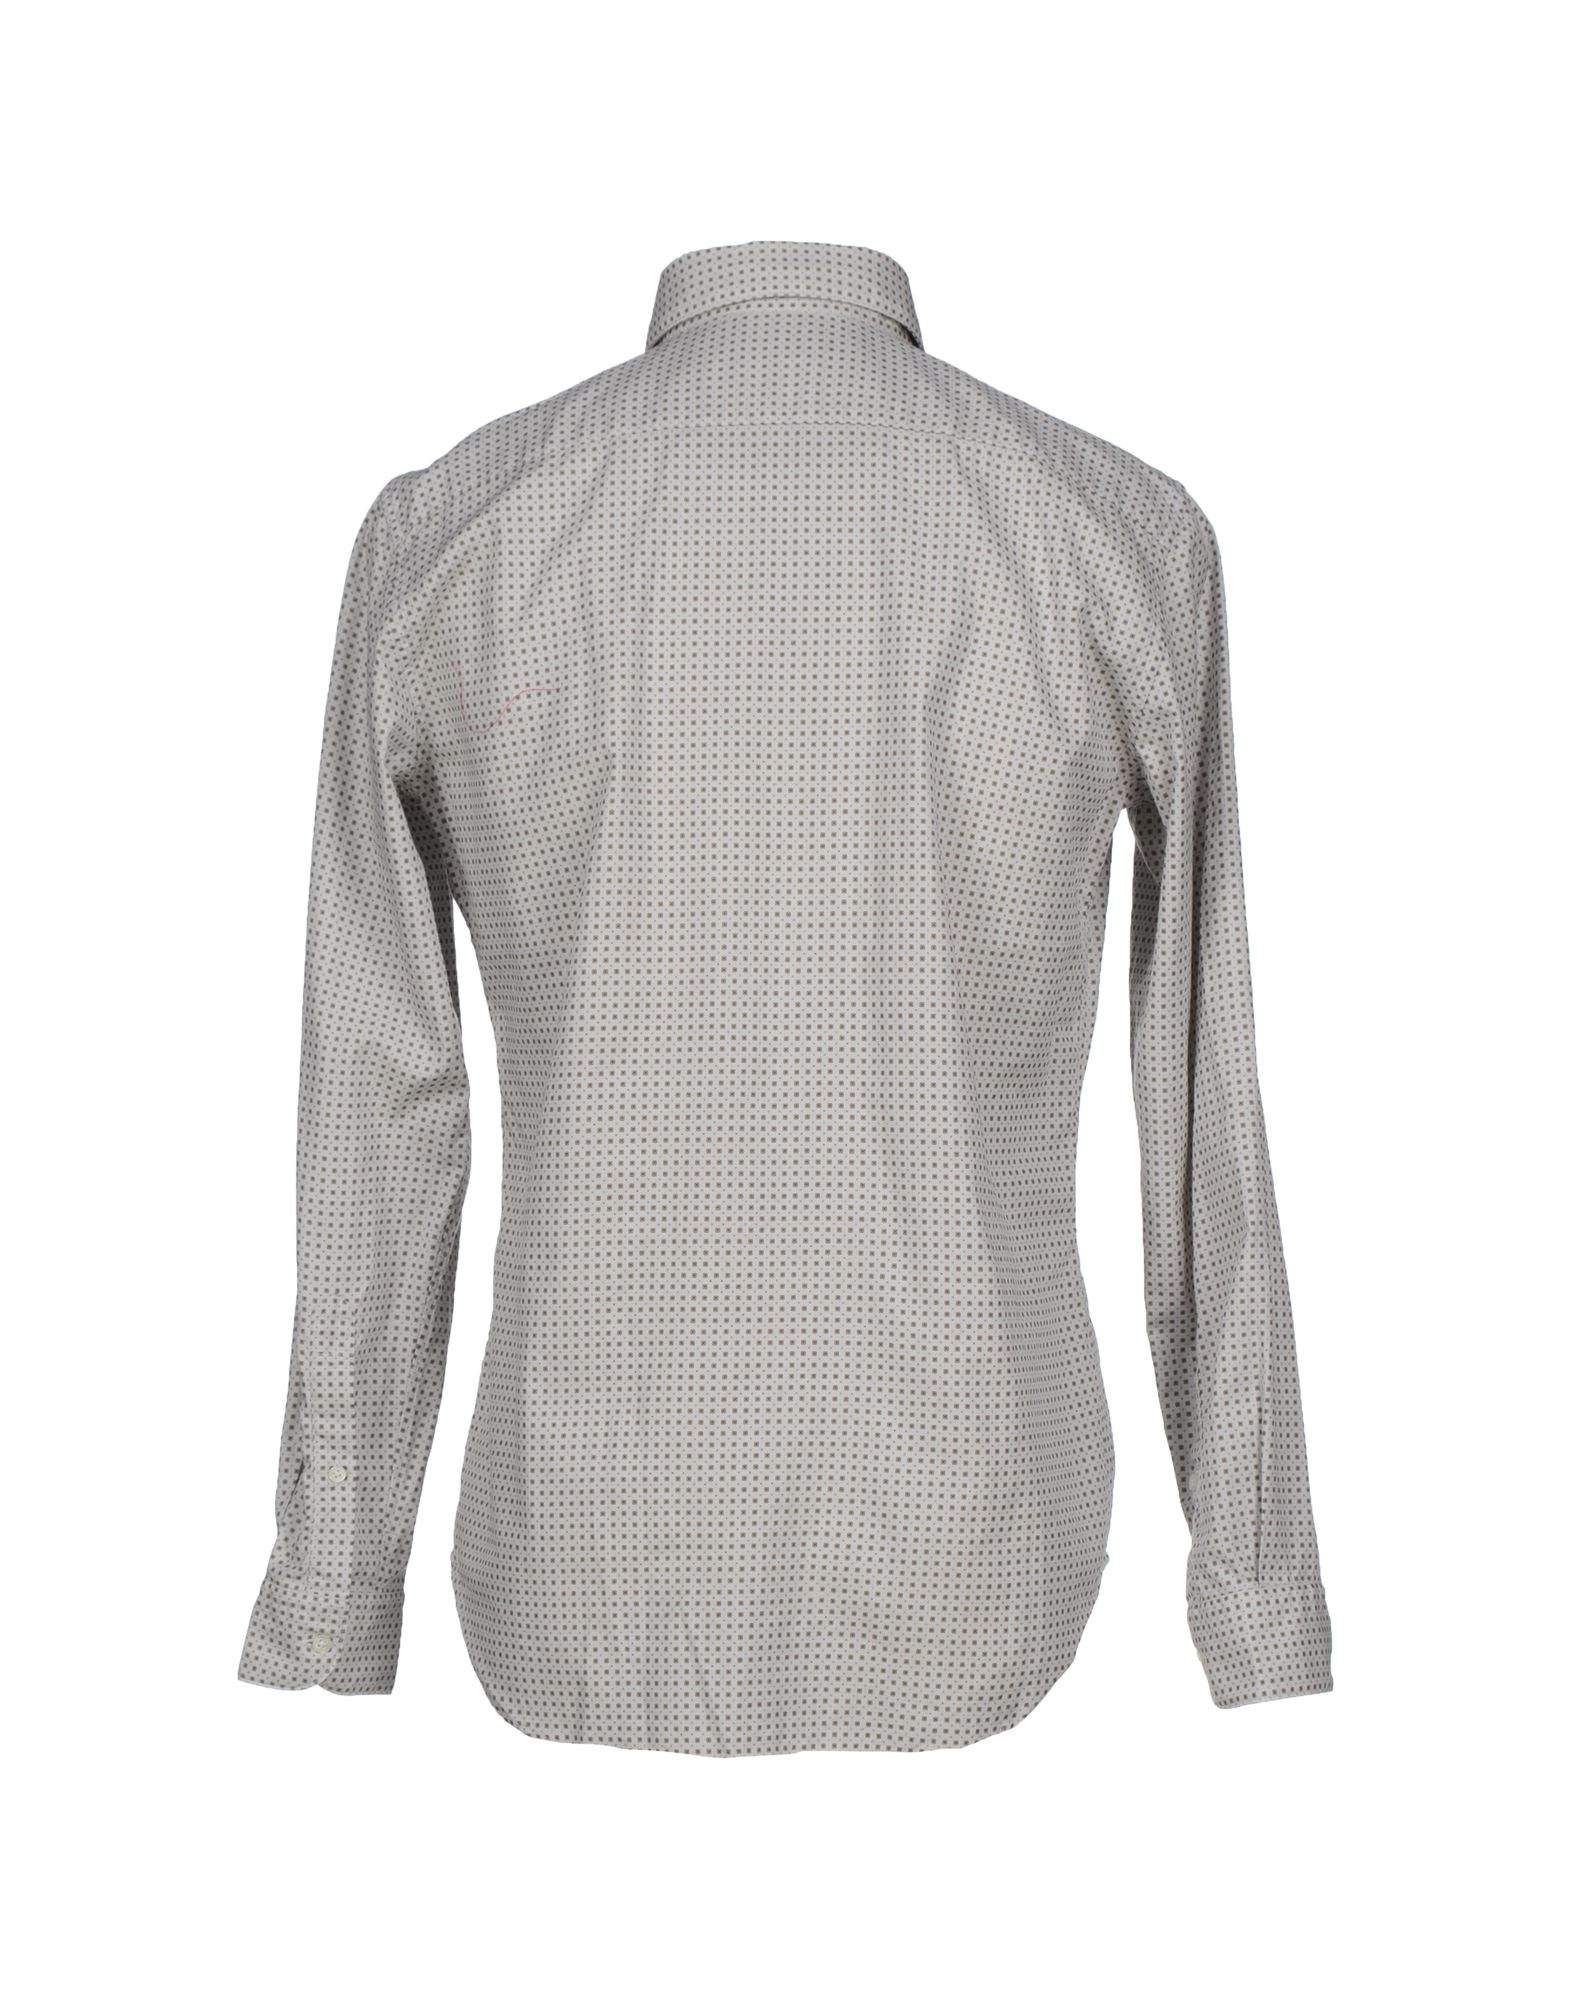 Lyst - Robert Friedman Shirt in Gray for Men